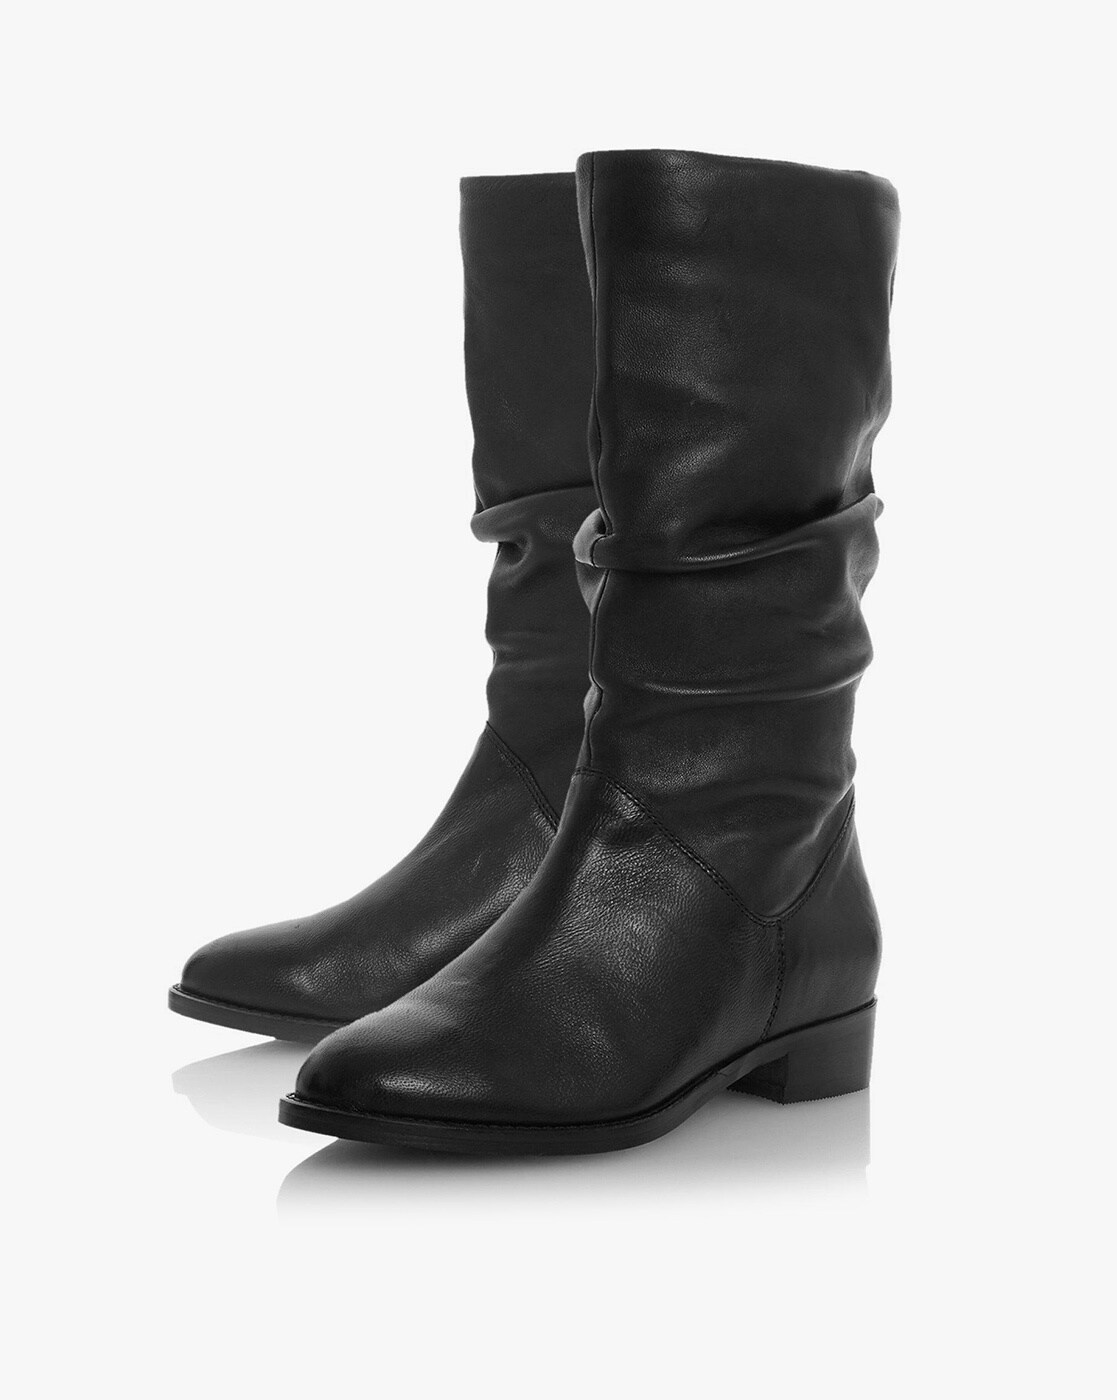 black calf length boots